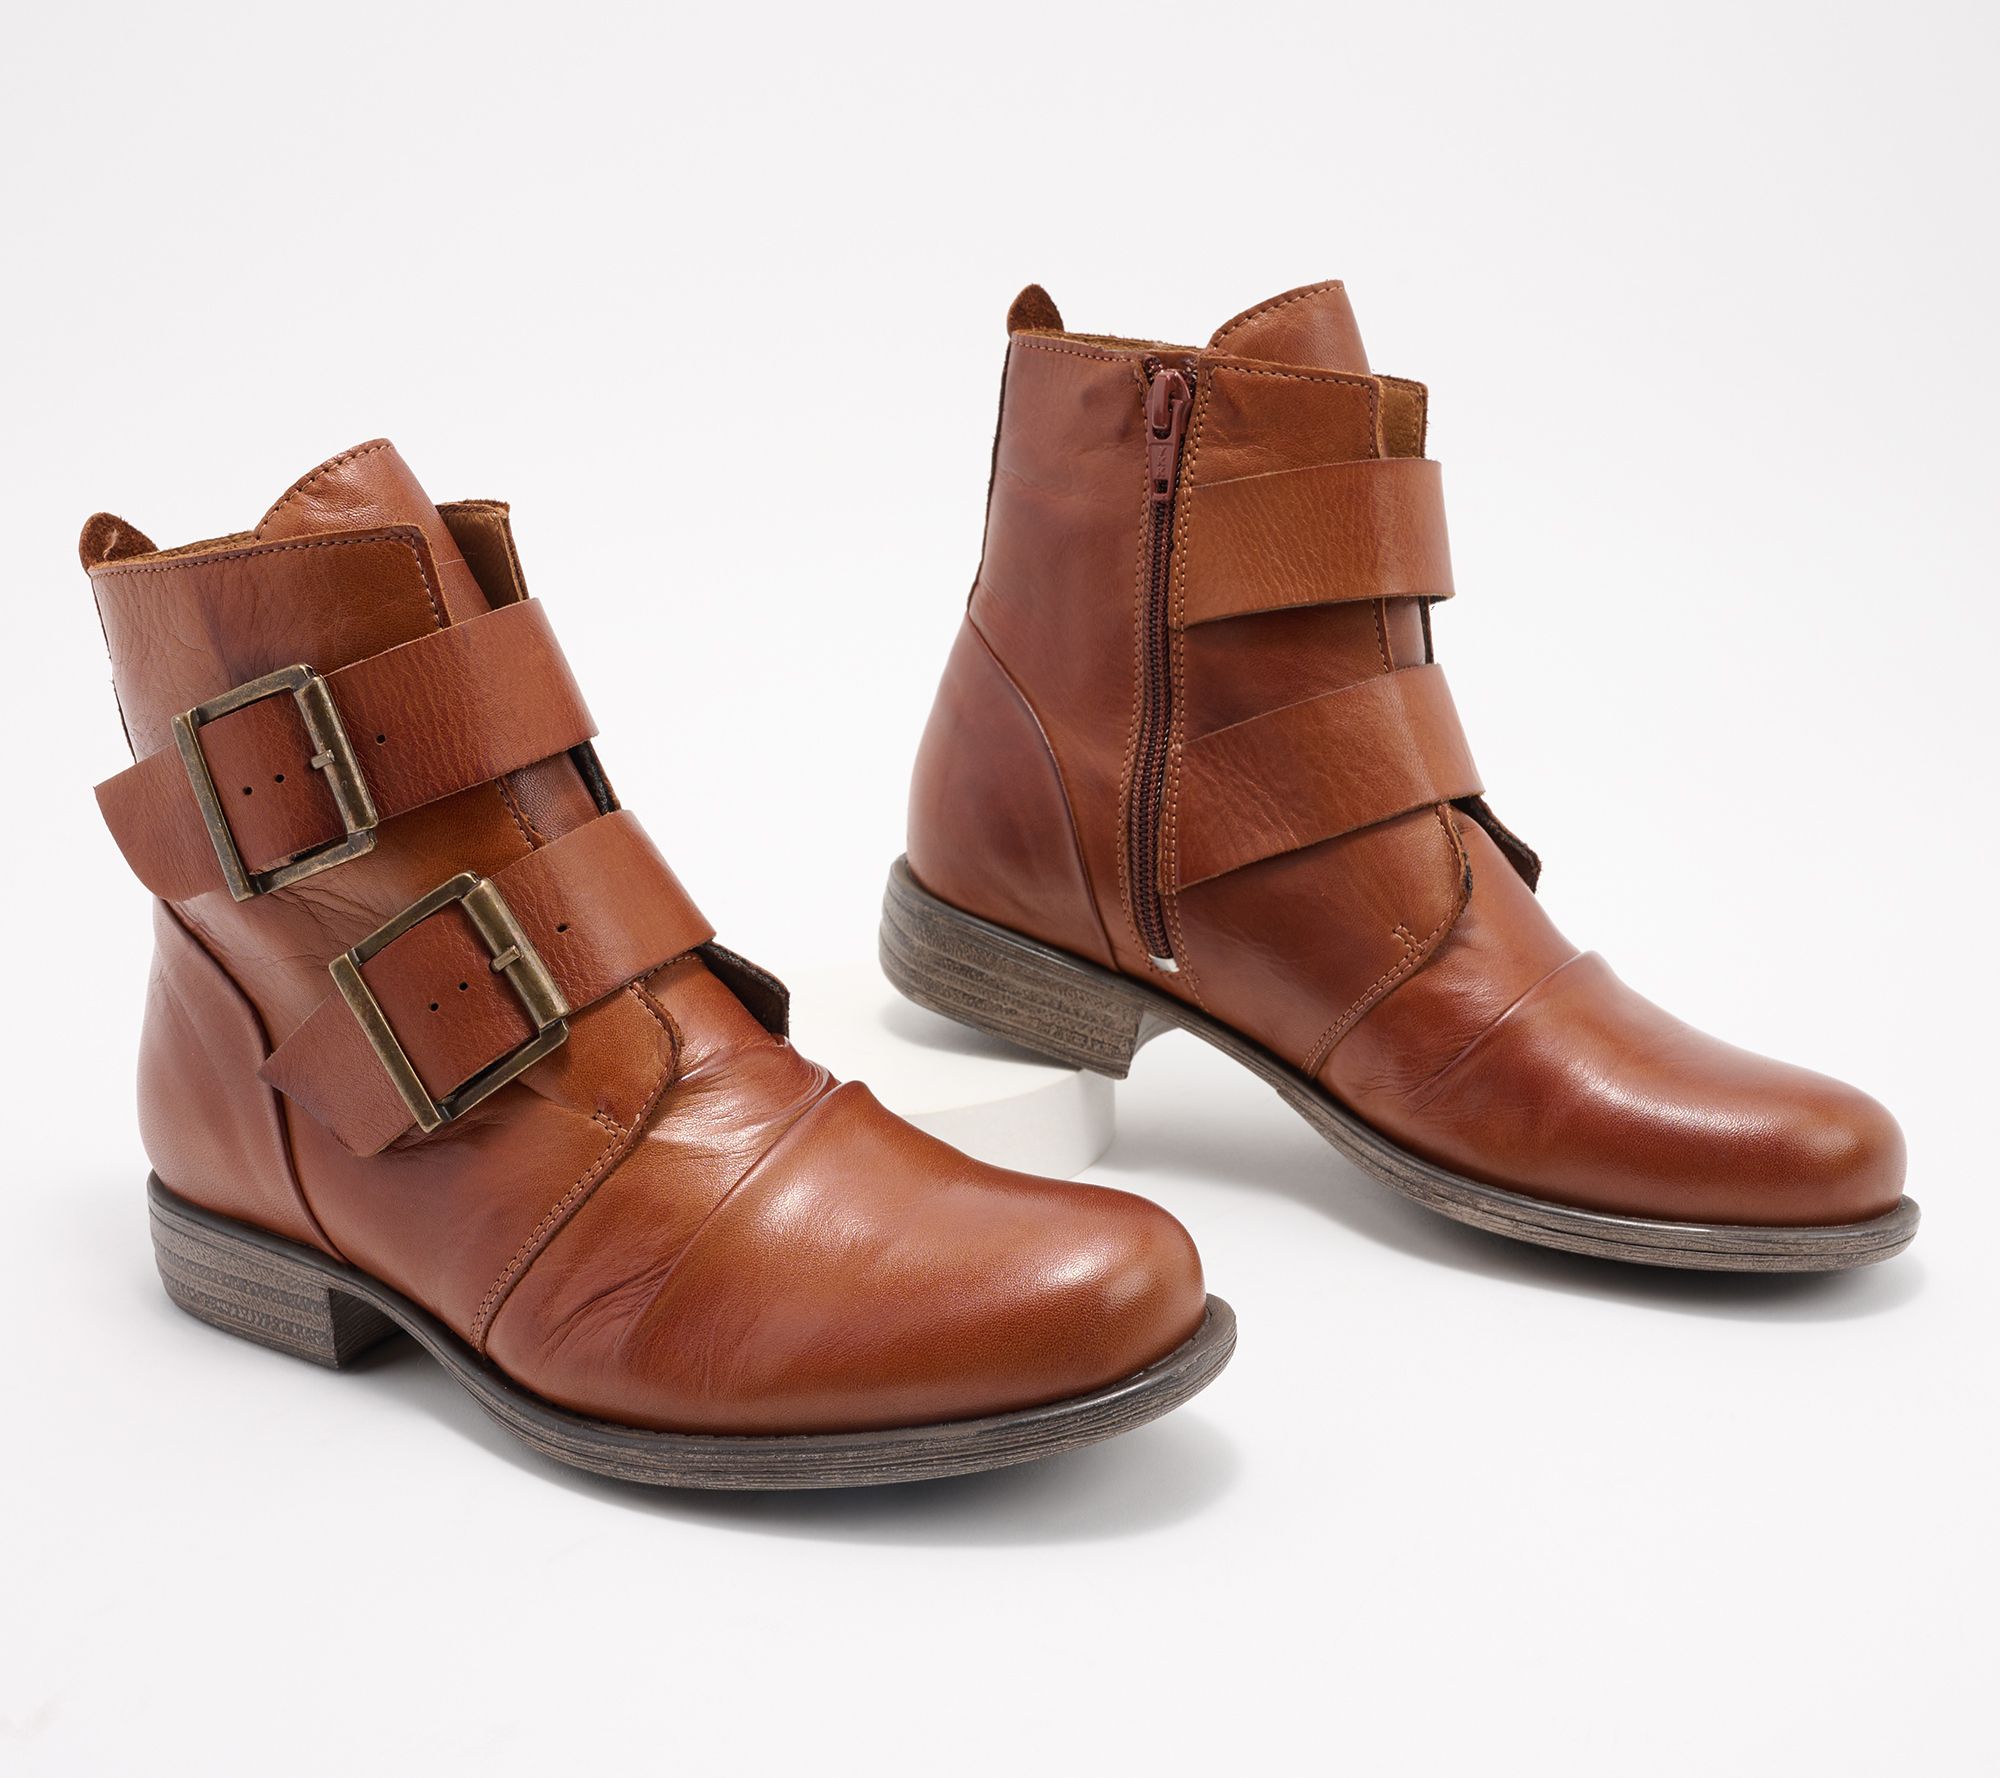 Miz Mooz Leather Double Buckle Ankle Boots - Limelight